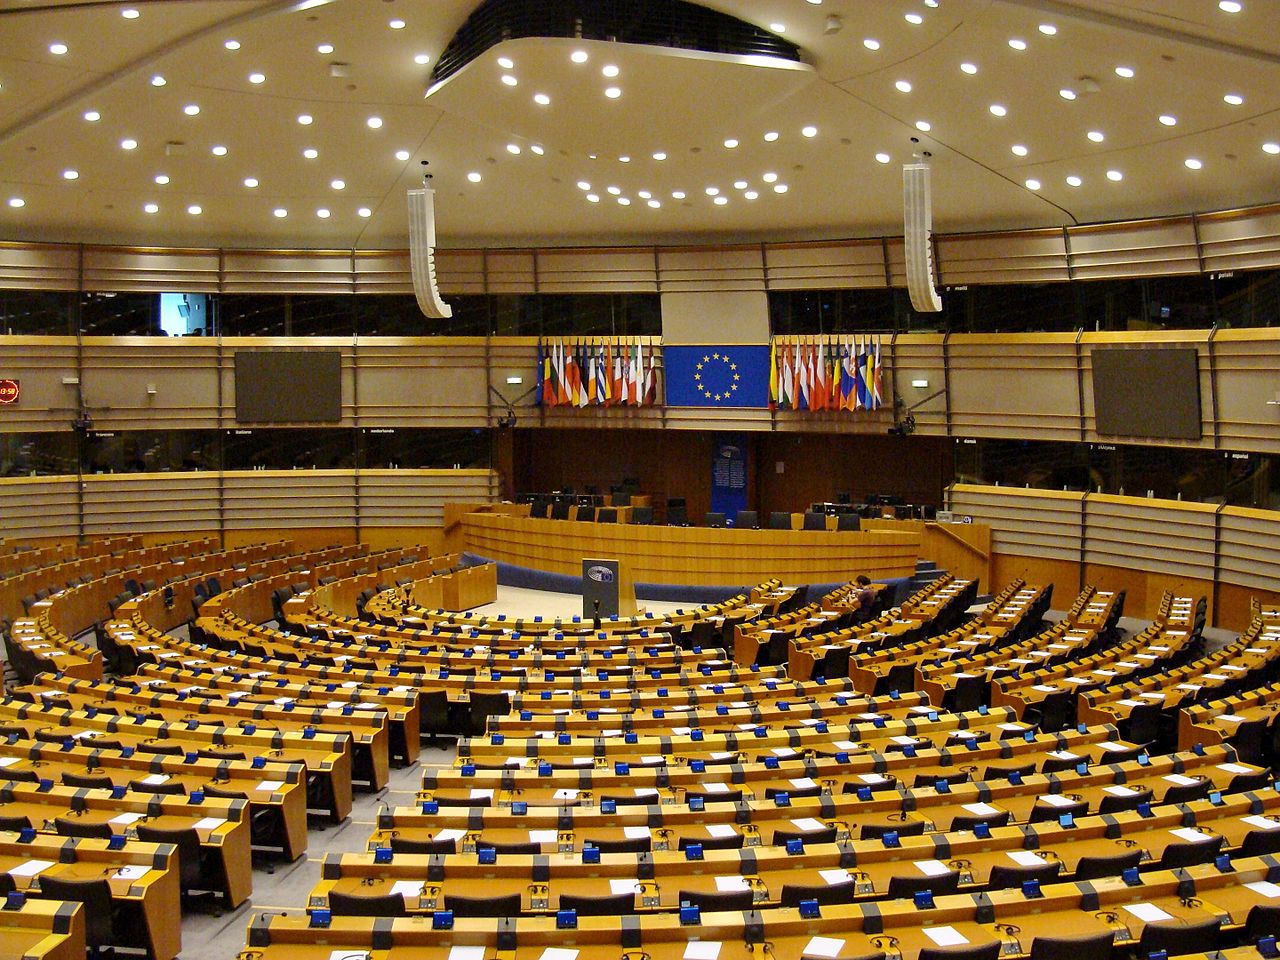 European Parlament Hemicycle Bryssels Belgium 2016 02